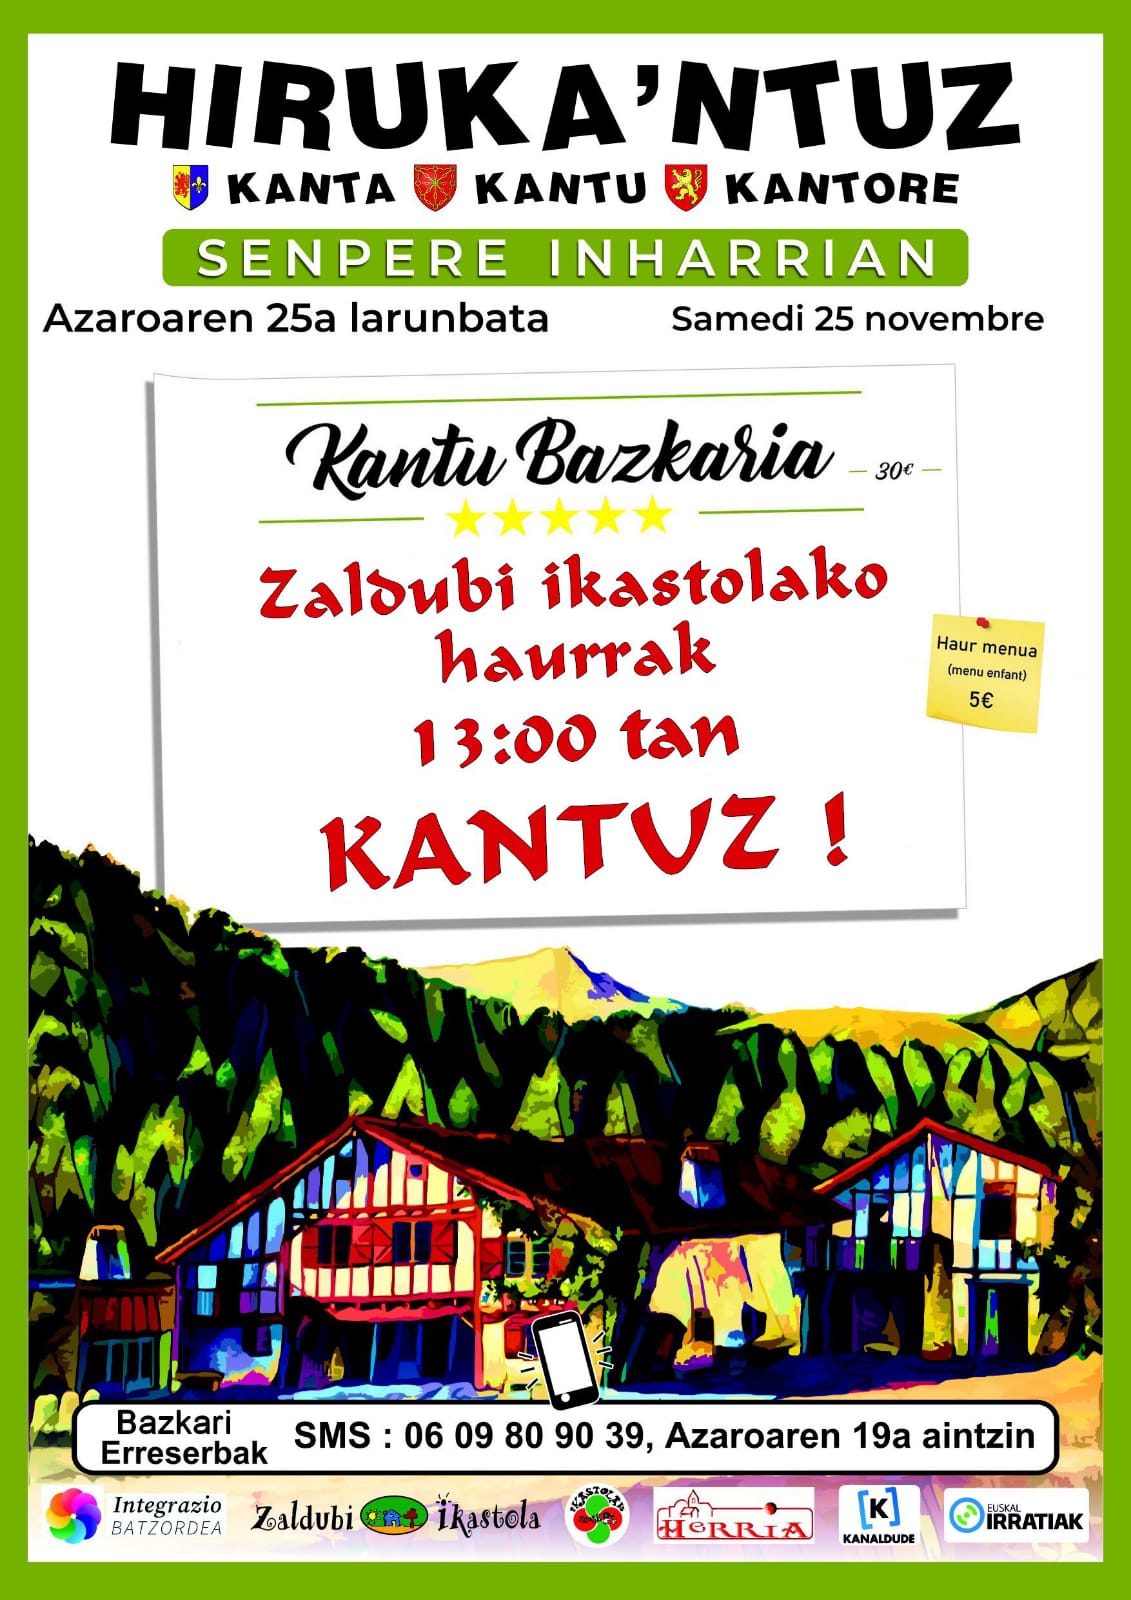 You are currently viewing Kantu bazkaria